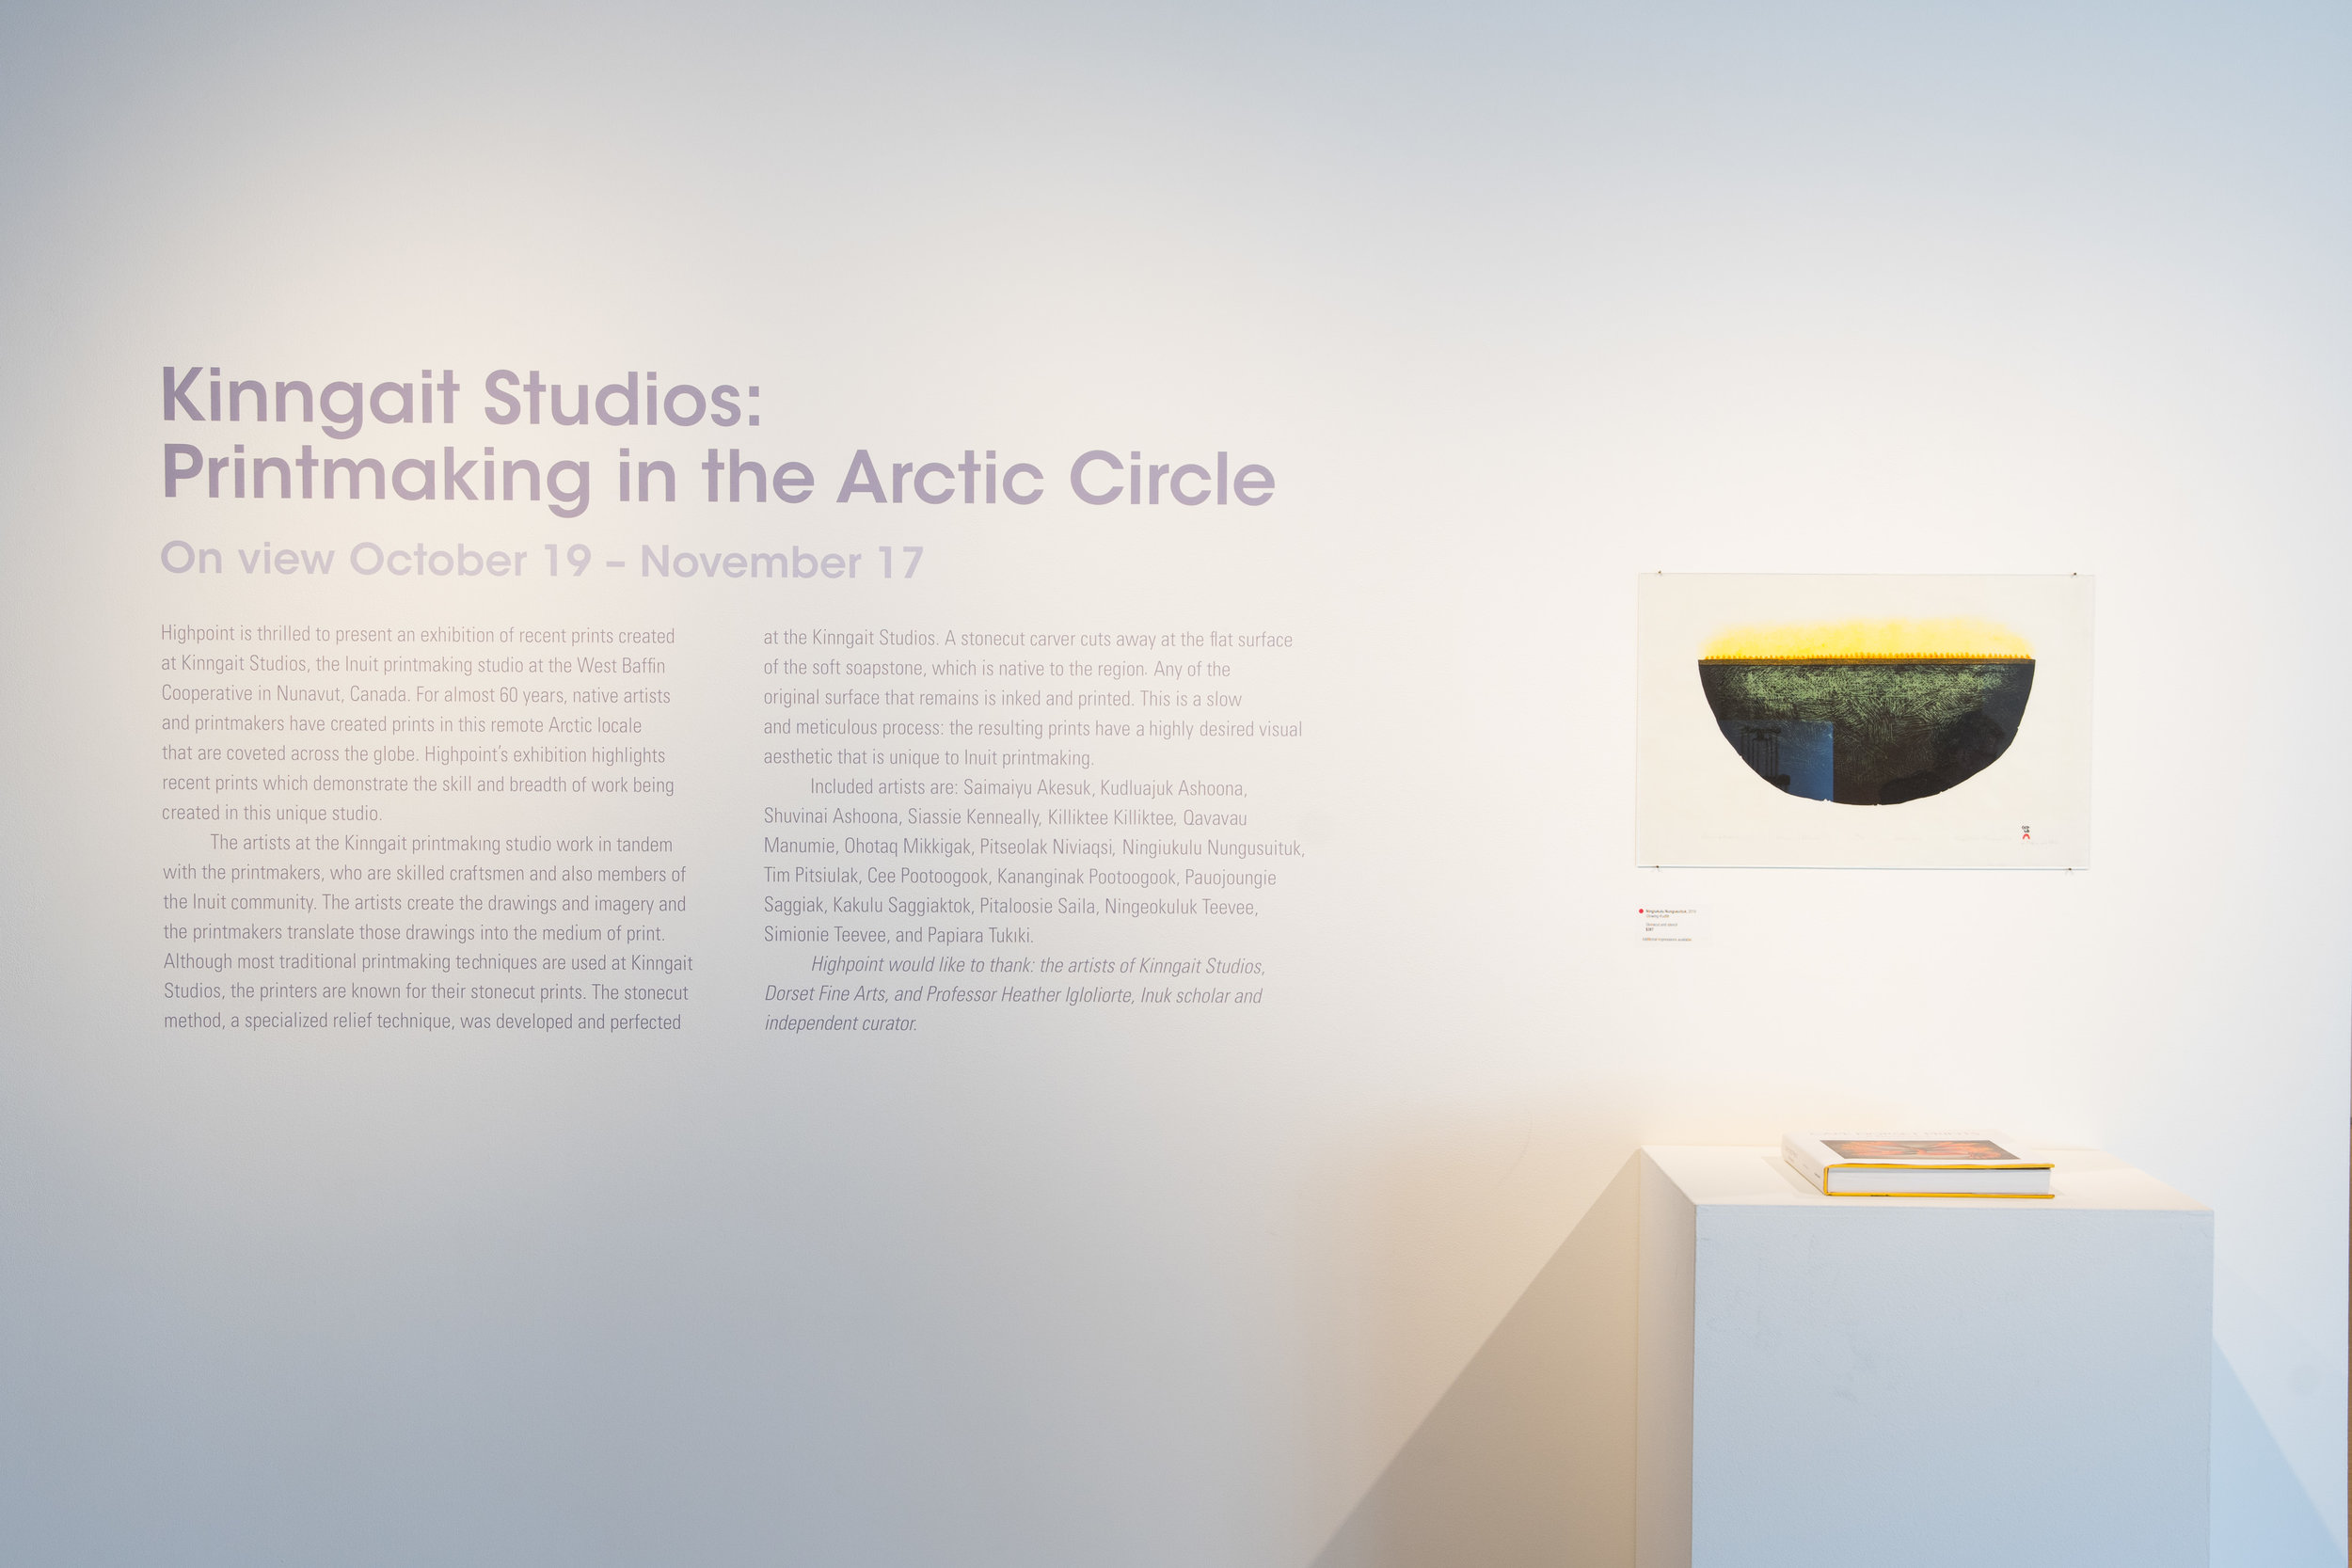  Highpoint Printmaking
Exhibit
Kinngait Studios: Printmaking in the Arctic Circle

181022a0006.JPG 